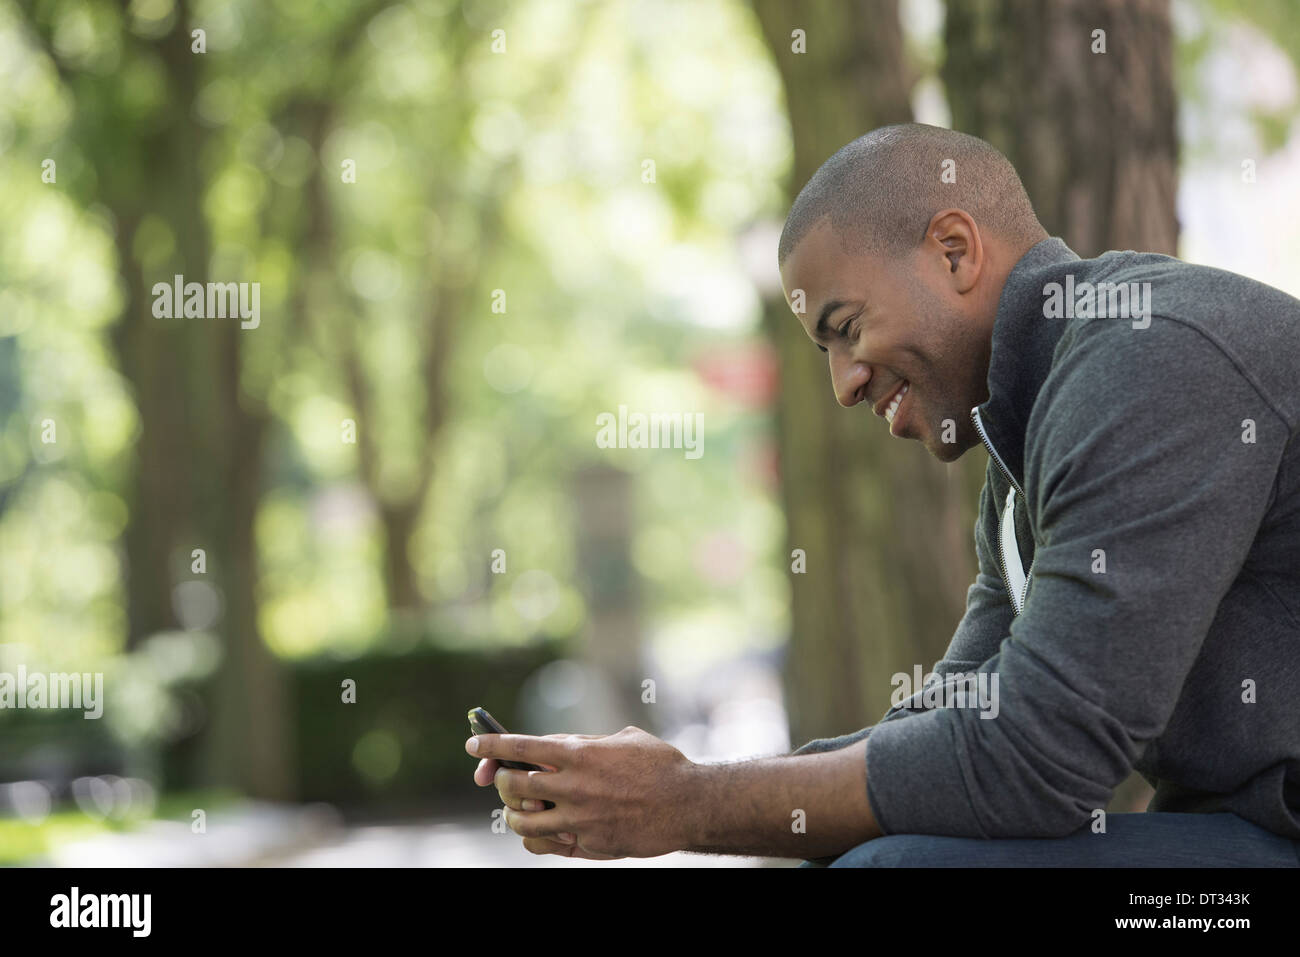 A man in a grey zipped sweatshirt using his smart phone Stock Photo